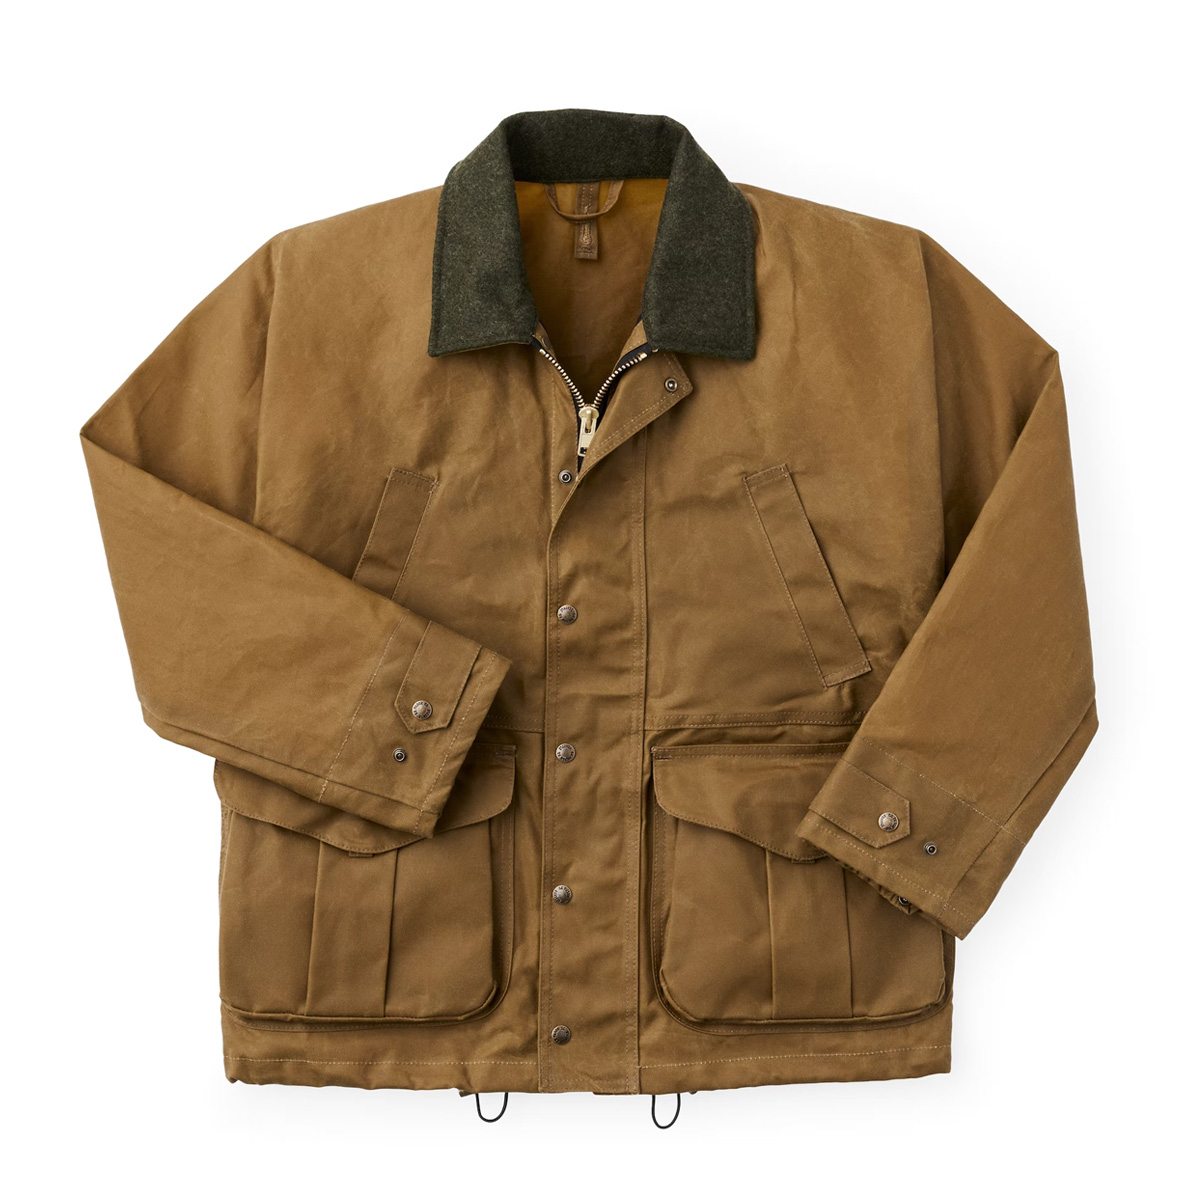 Filson Tin Cloth Field Jacket Dark Tan, tough work jacket